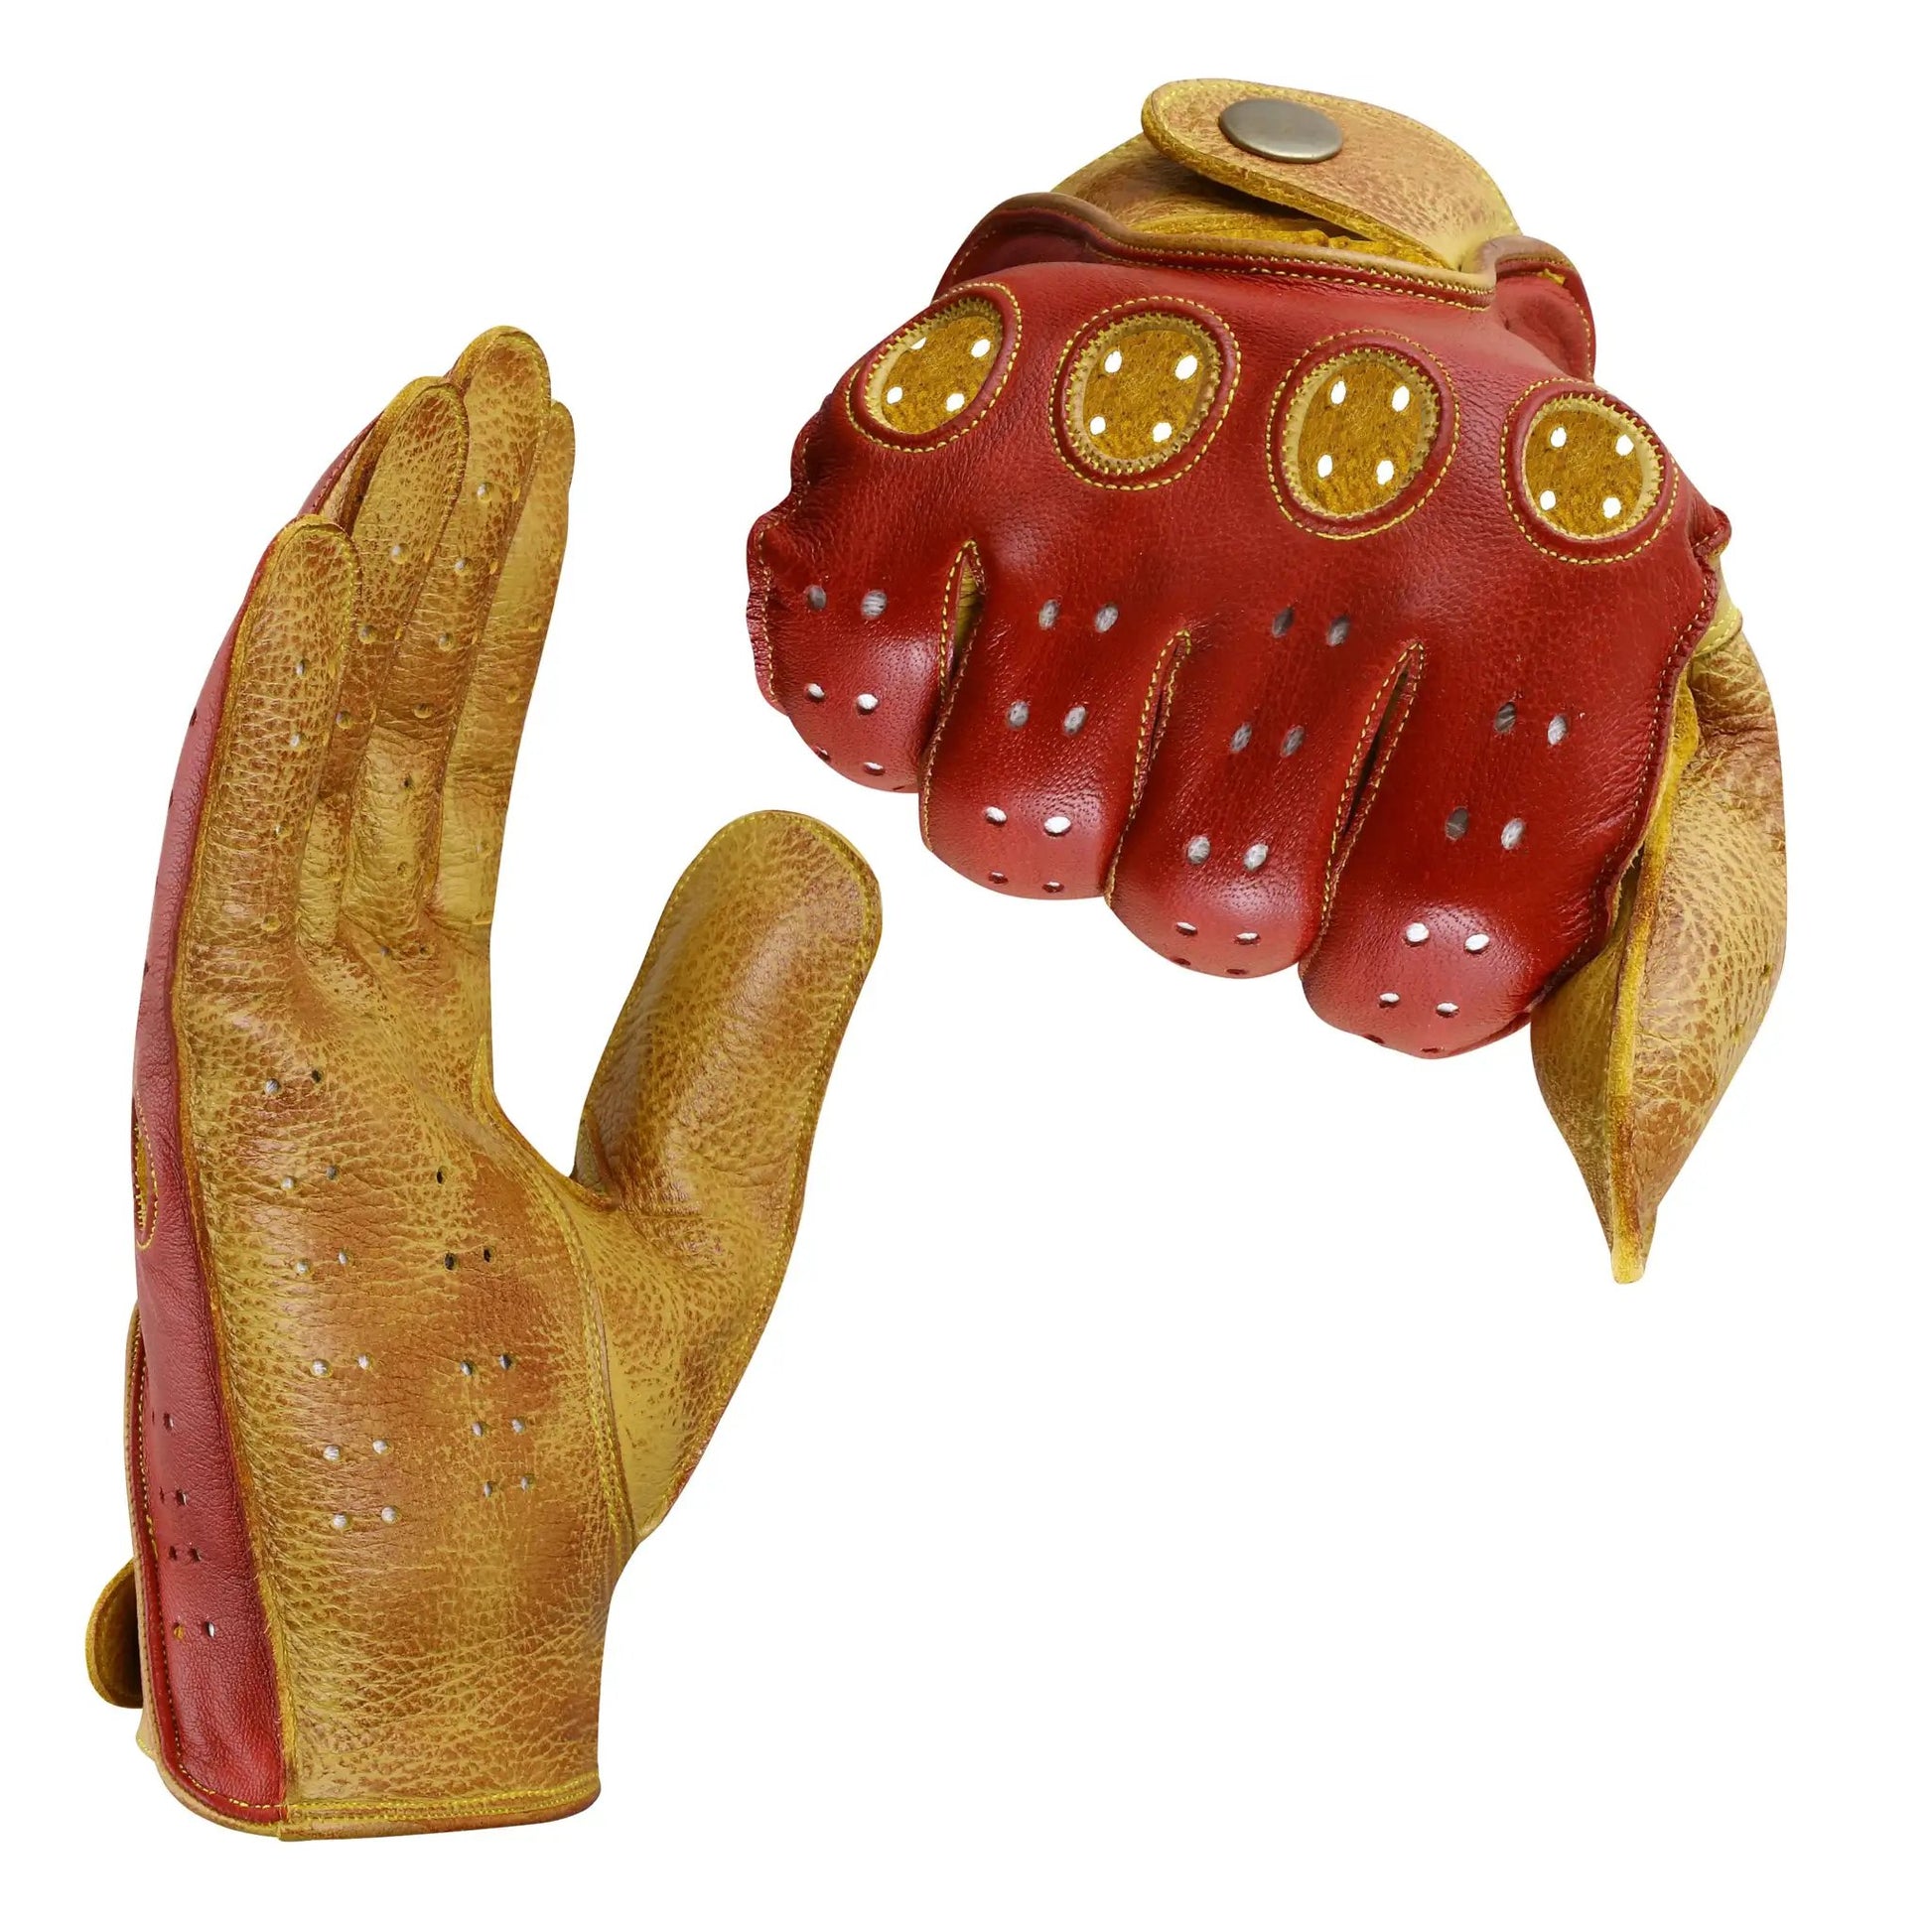 Deerskin Leather Gloves